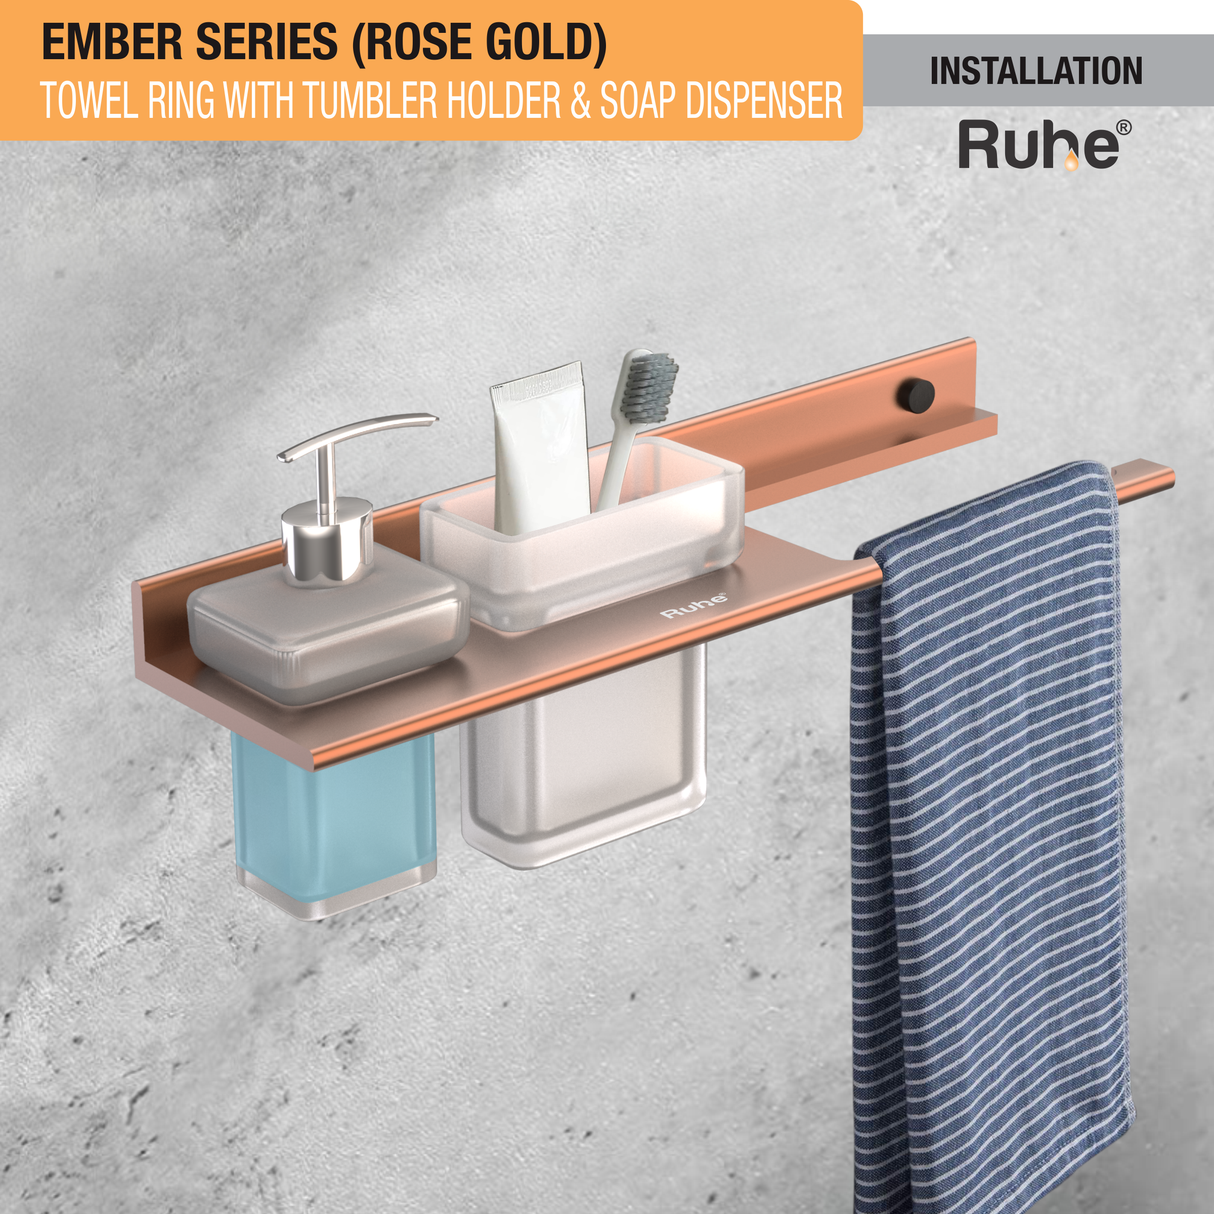 Ember Rose Gold Towel Ring with Tumbler Holder & Soap Dispenser (Space Aluminium) installation